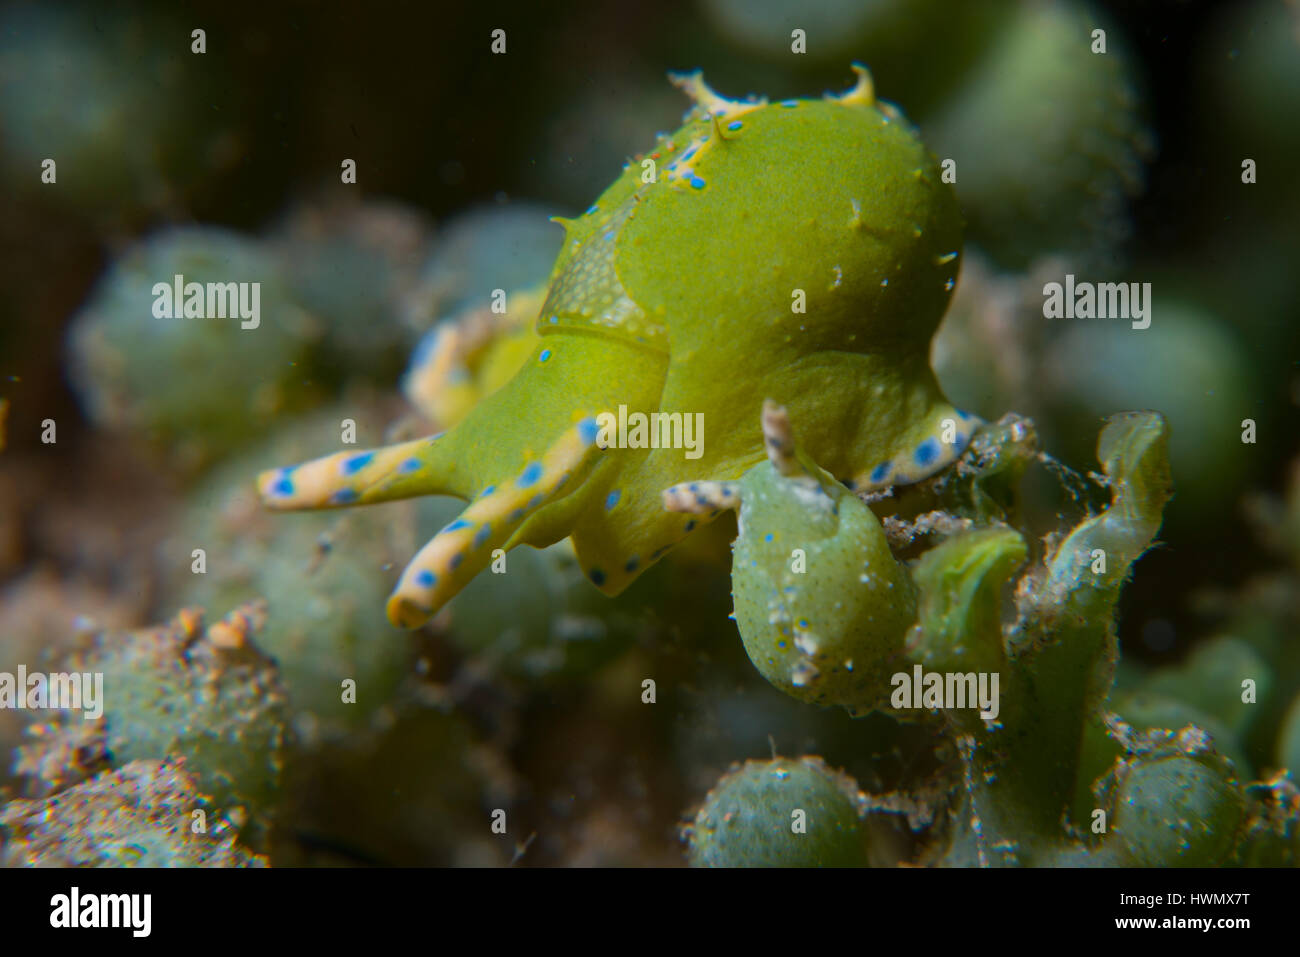 Paar von Meeresschnecken, Oxynoe Viridis, auf grünen Alge Caulerpa Racemosa, Anilao, Luzon, Guimaras Strait, Philippinen Stockfoto